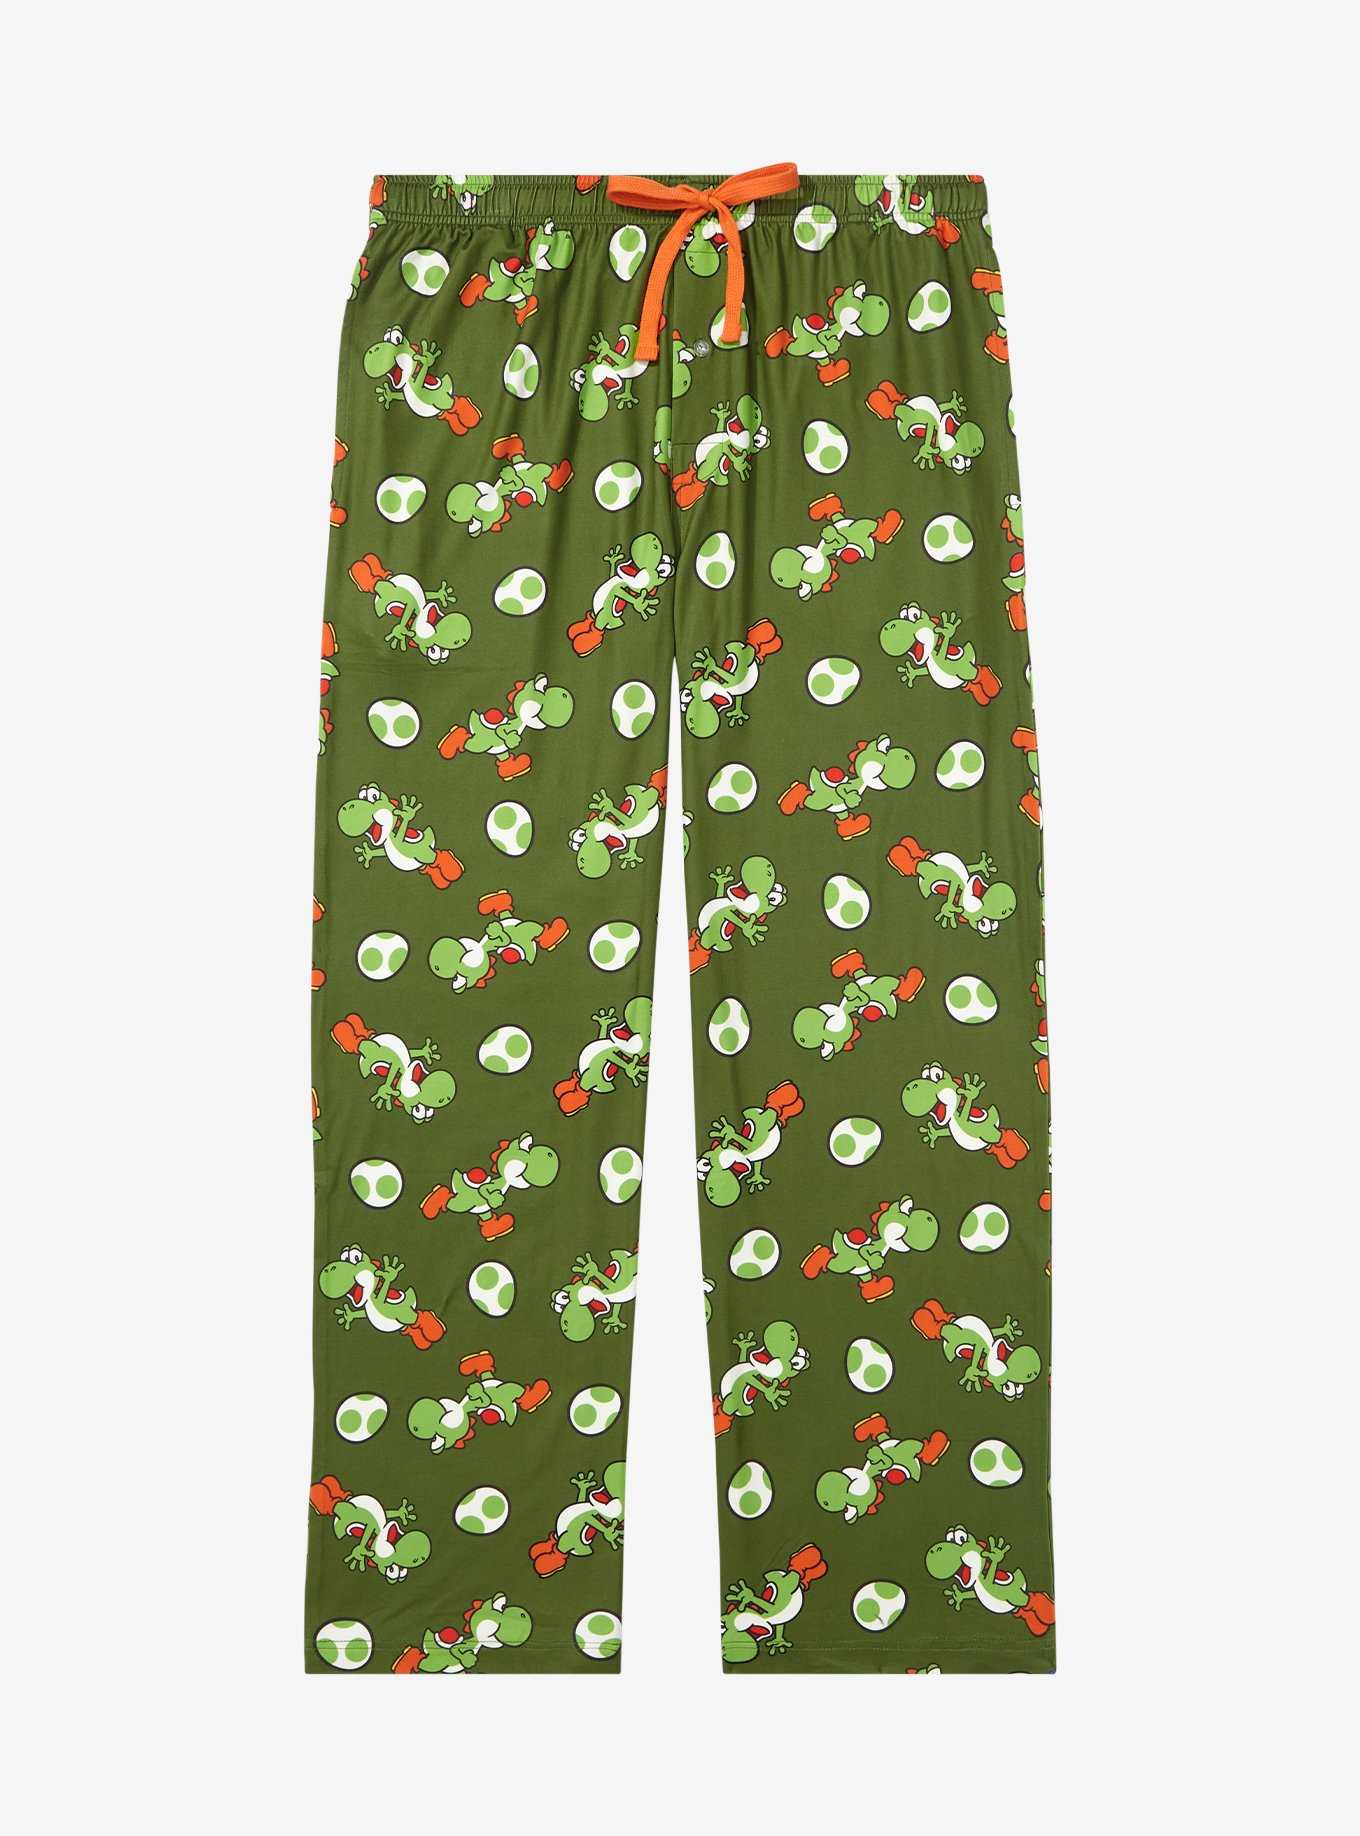 NWT Stranger Things Pajamas Pants Mens Size S-XL Christmas Red